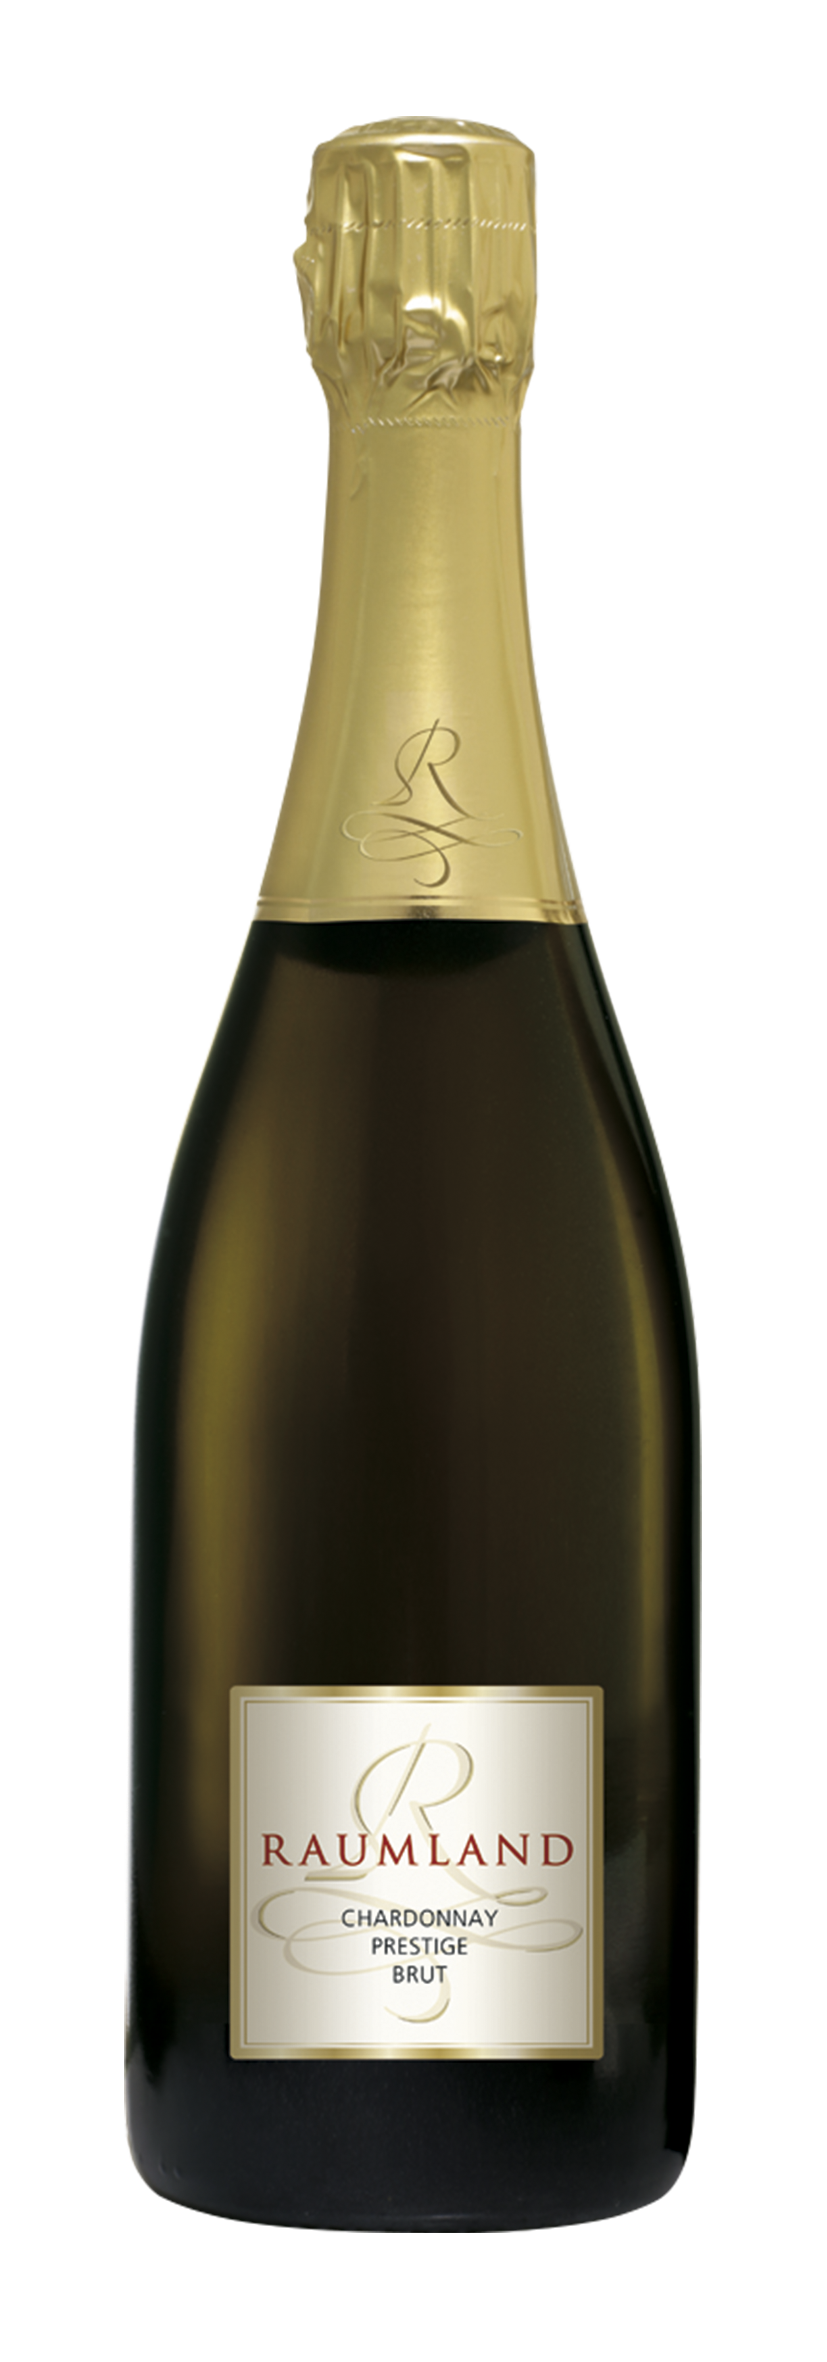 Chardonnay Prestige Brut 2011